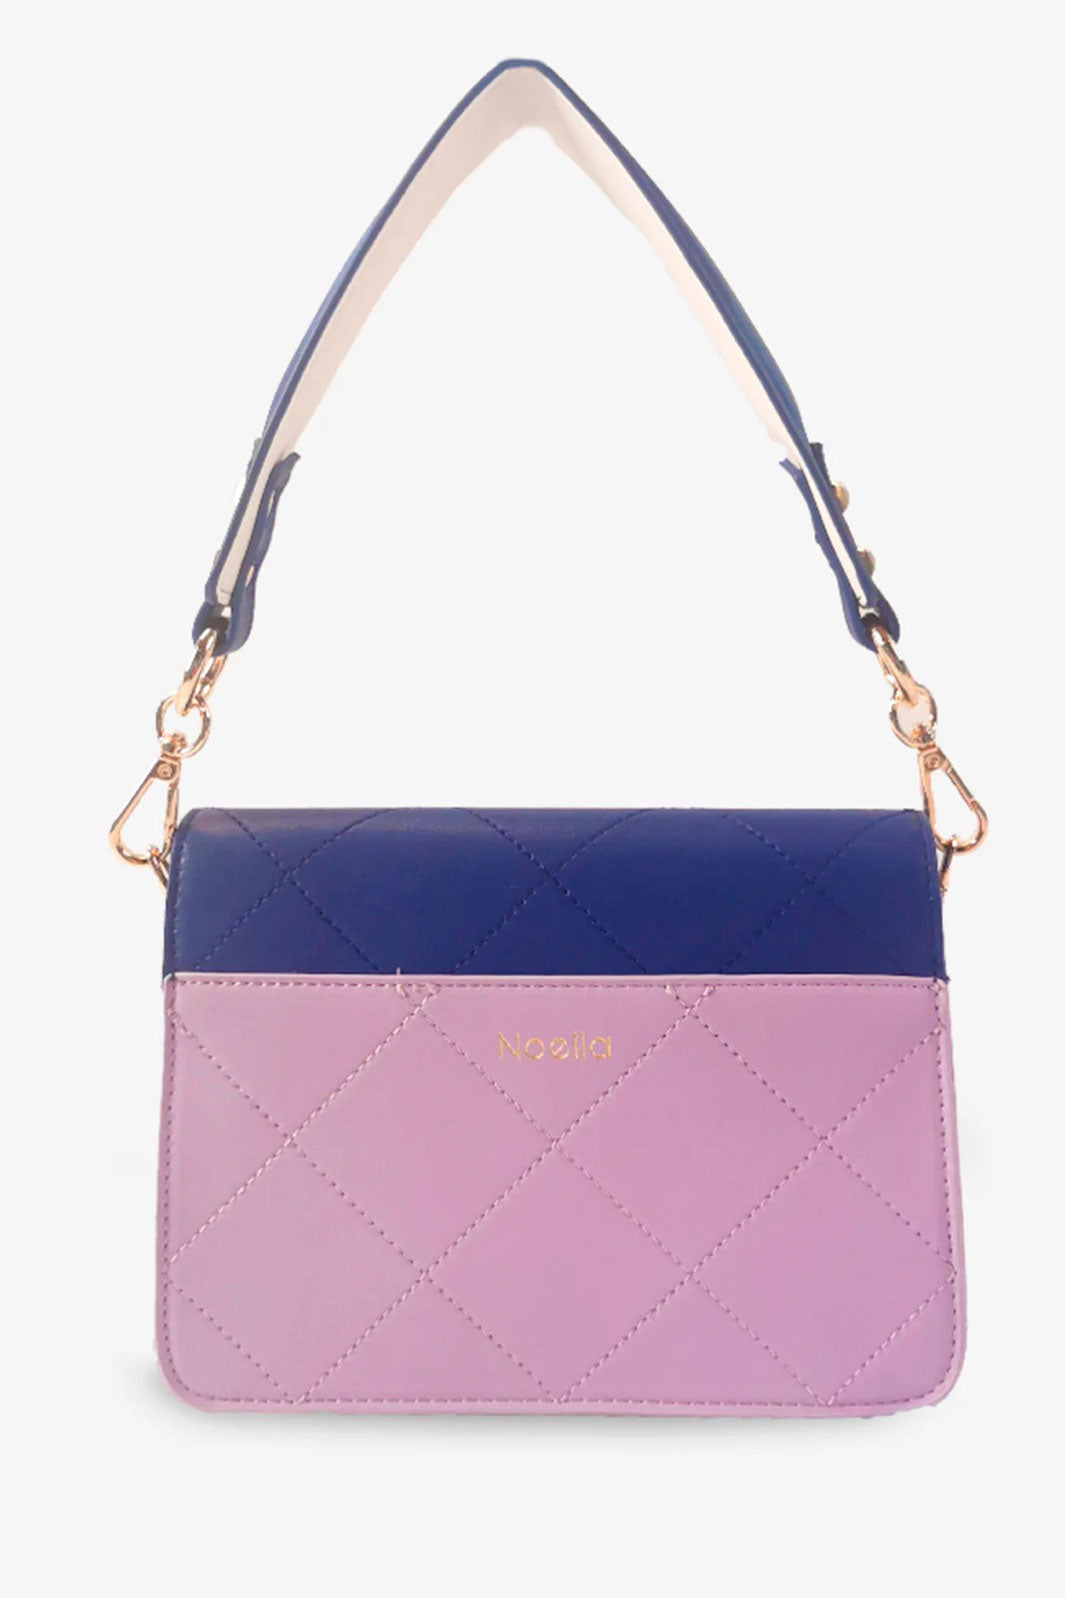 Noella - Blanca Bag Medium - Royal Blue/White/Purple Tasker 